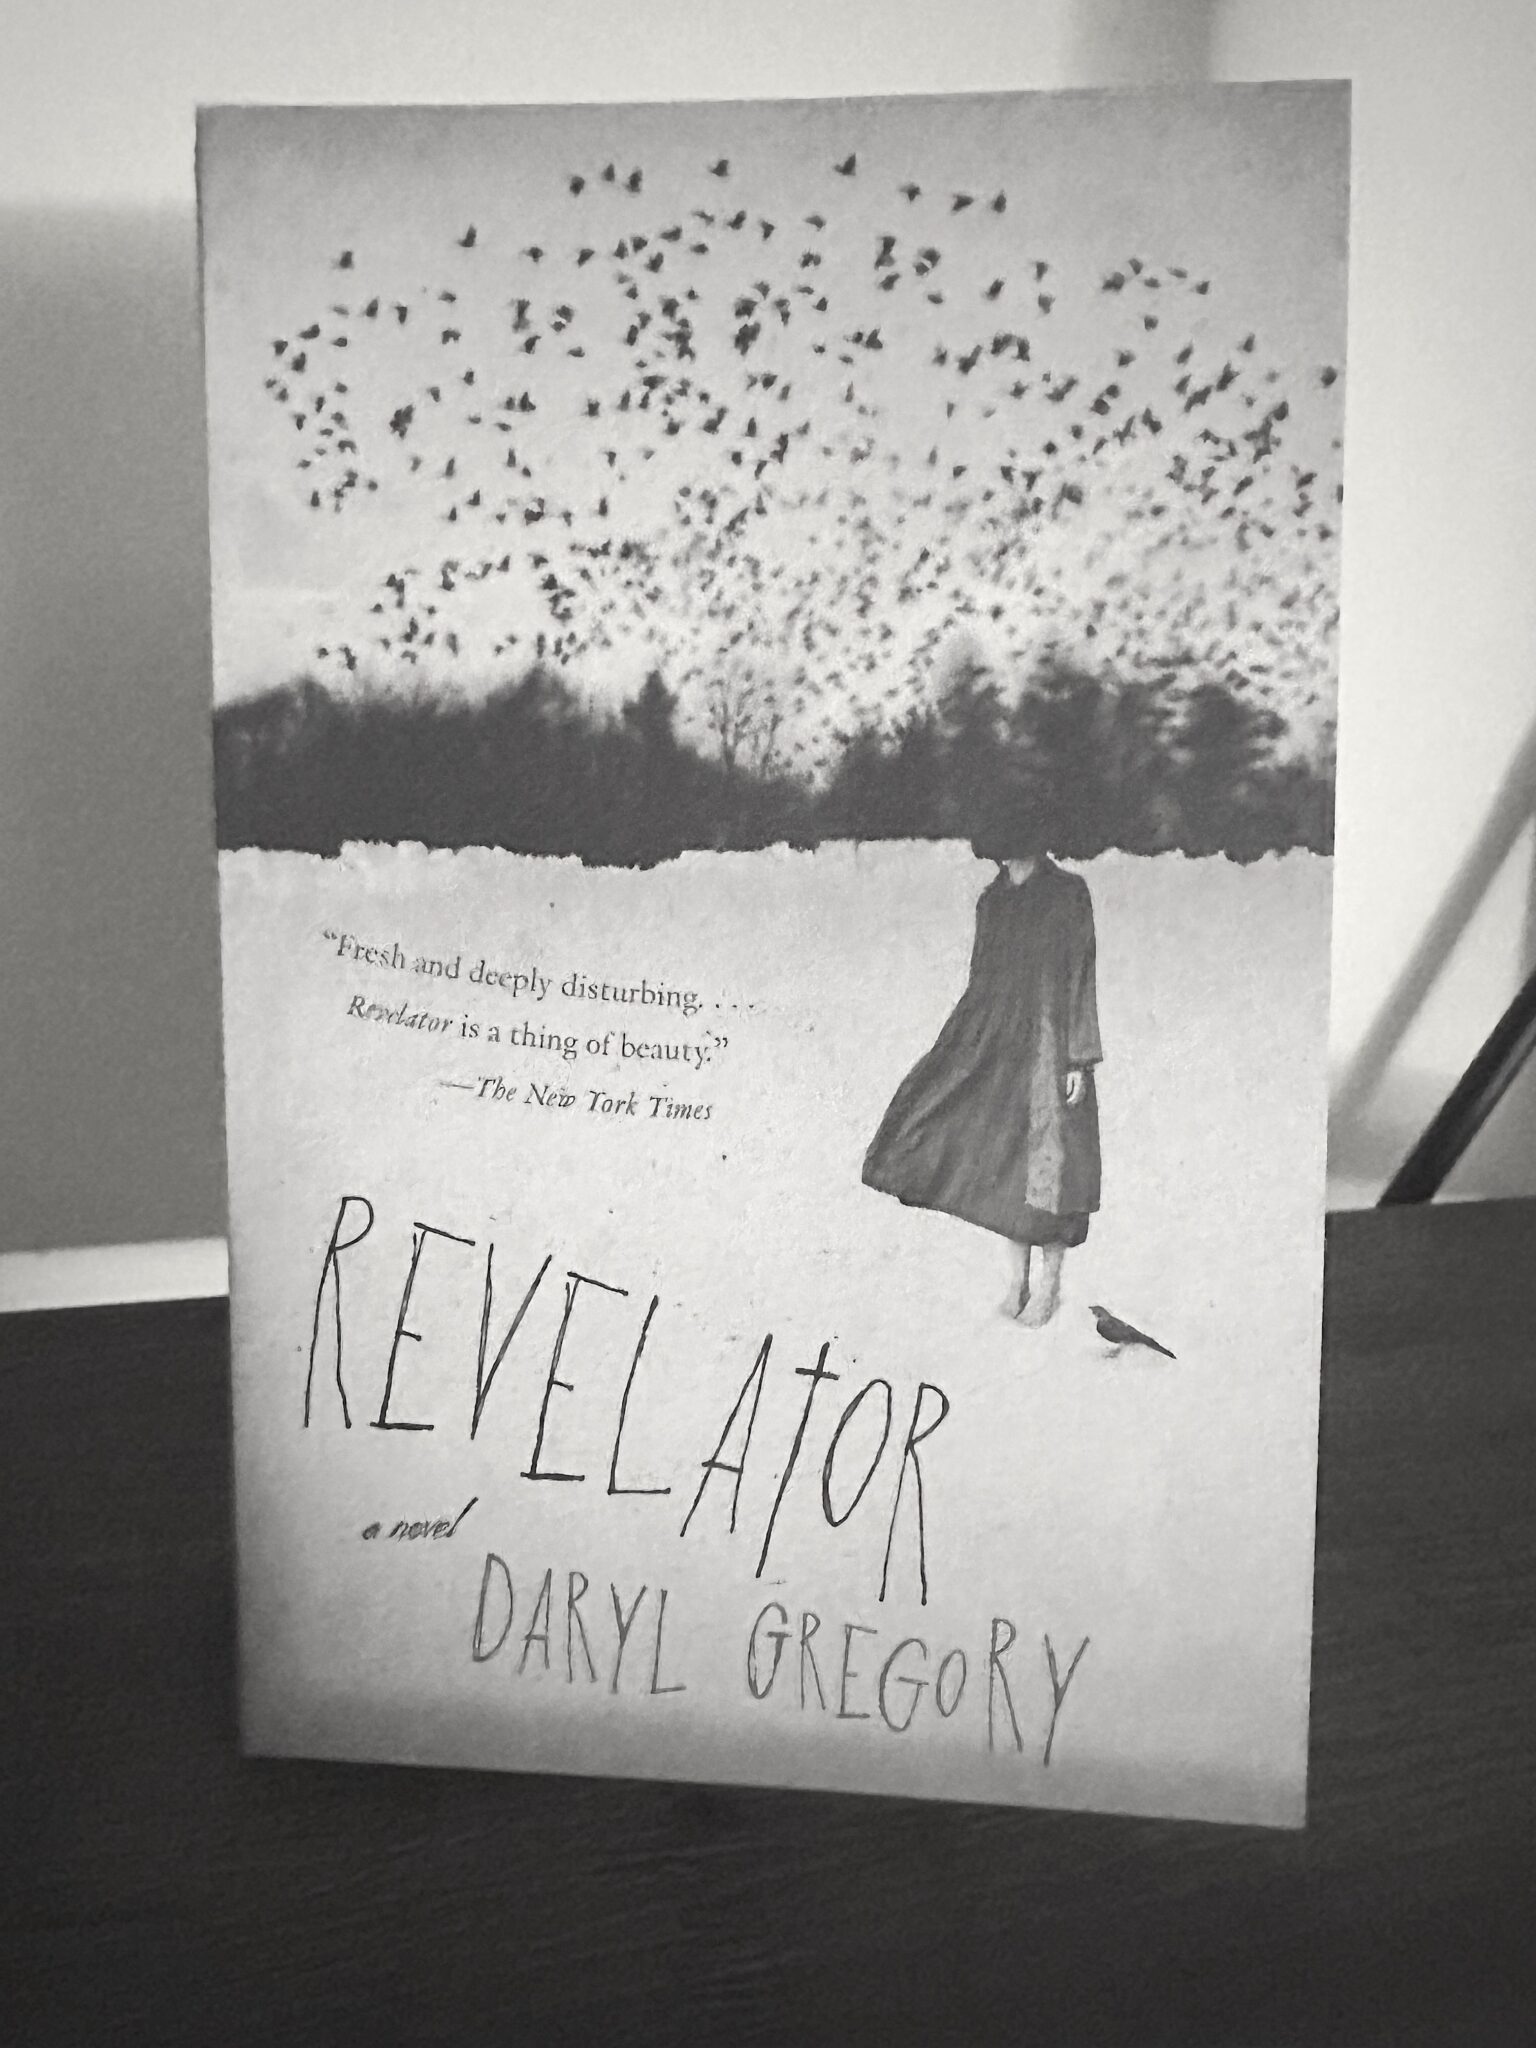 Revelator by Darryl Gregory